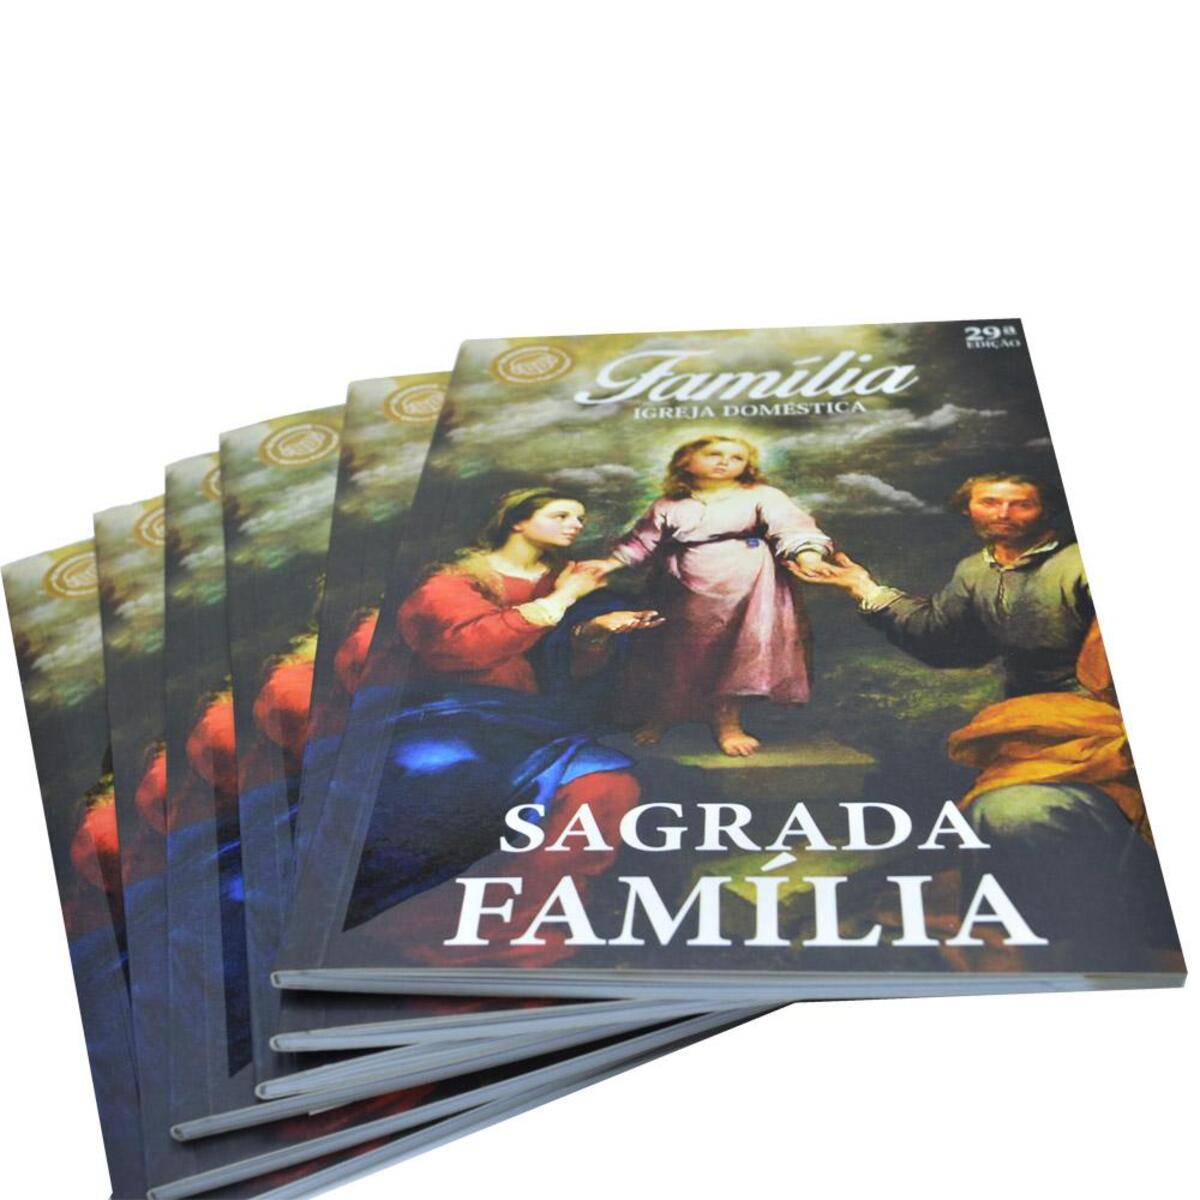 Livro edio especial Sagrada Familia 